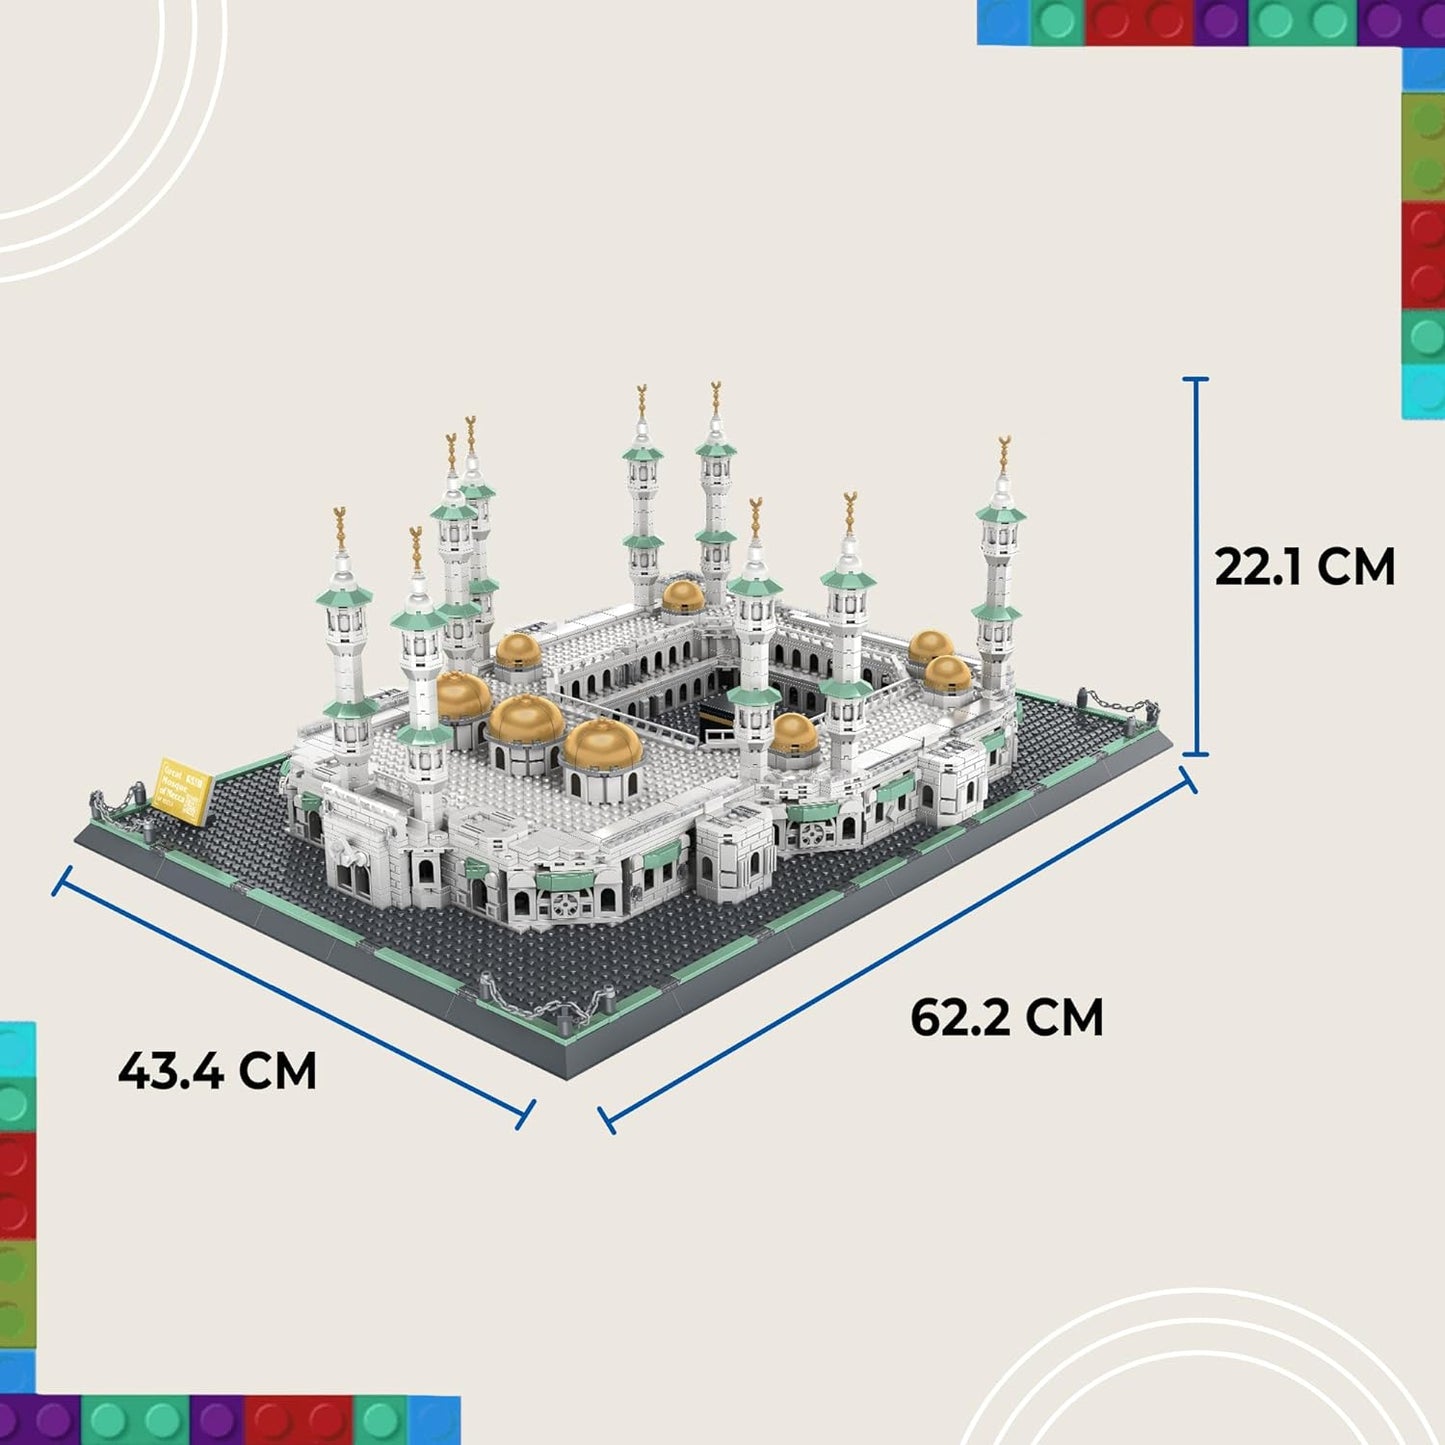 Masjid Al Haram Building Blocks Set - 2000+ Pcs Grand Mosque of Mecca Islamic Toys for Kids - Muslim Eid Mubarak Eid Gifts for Kids